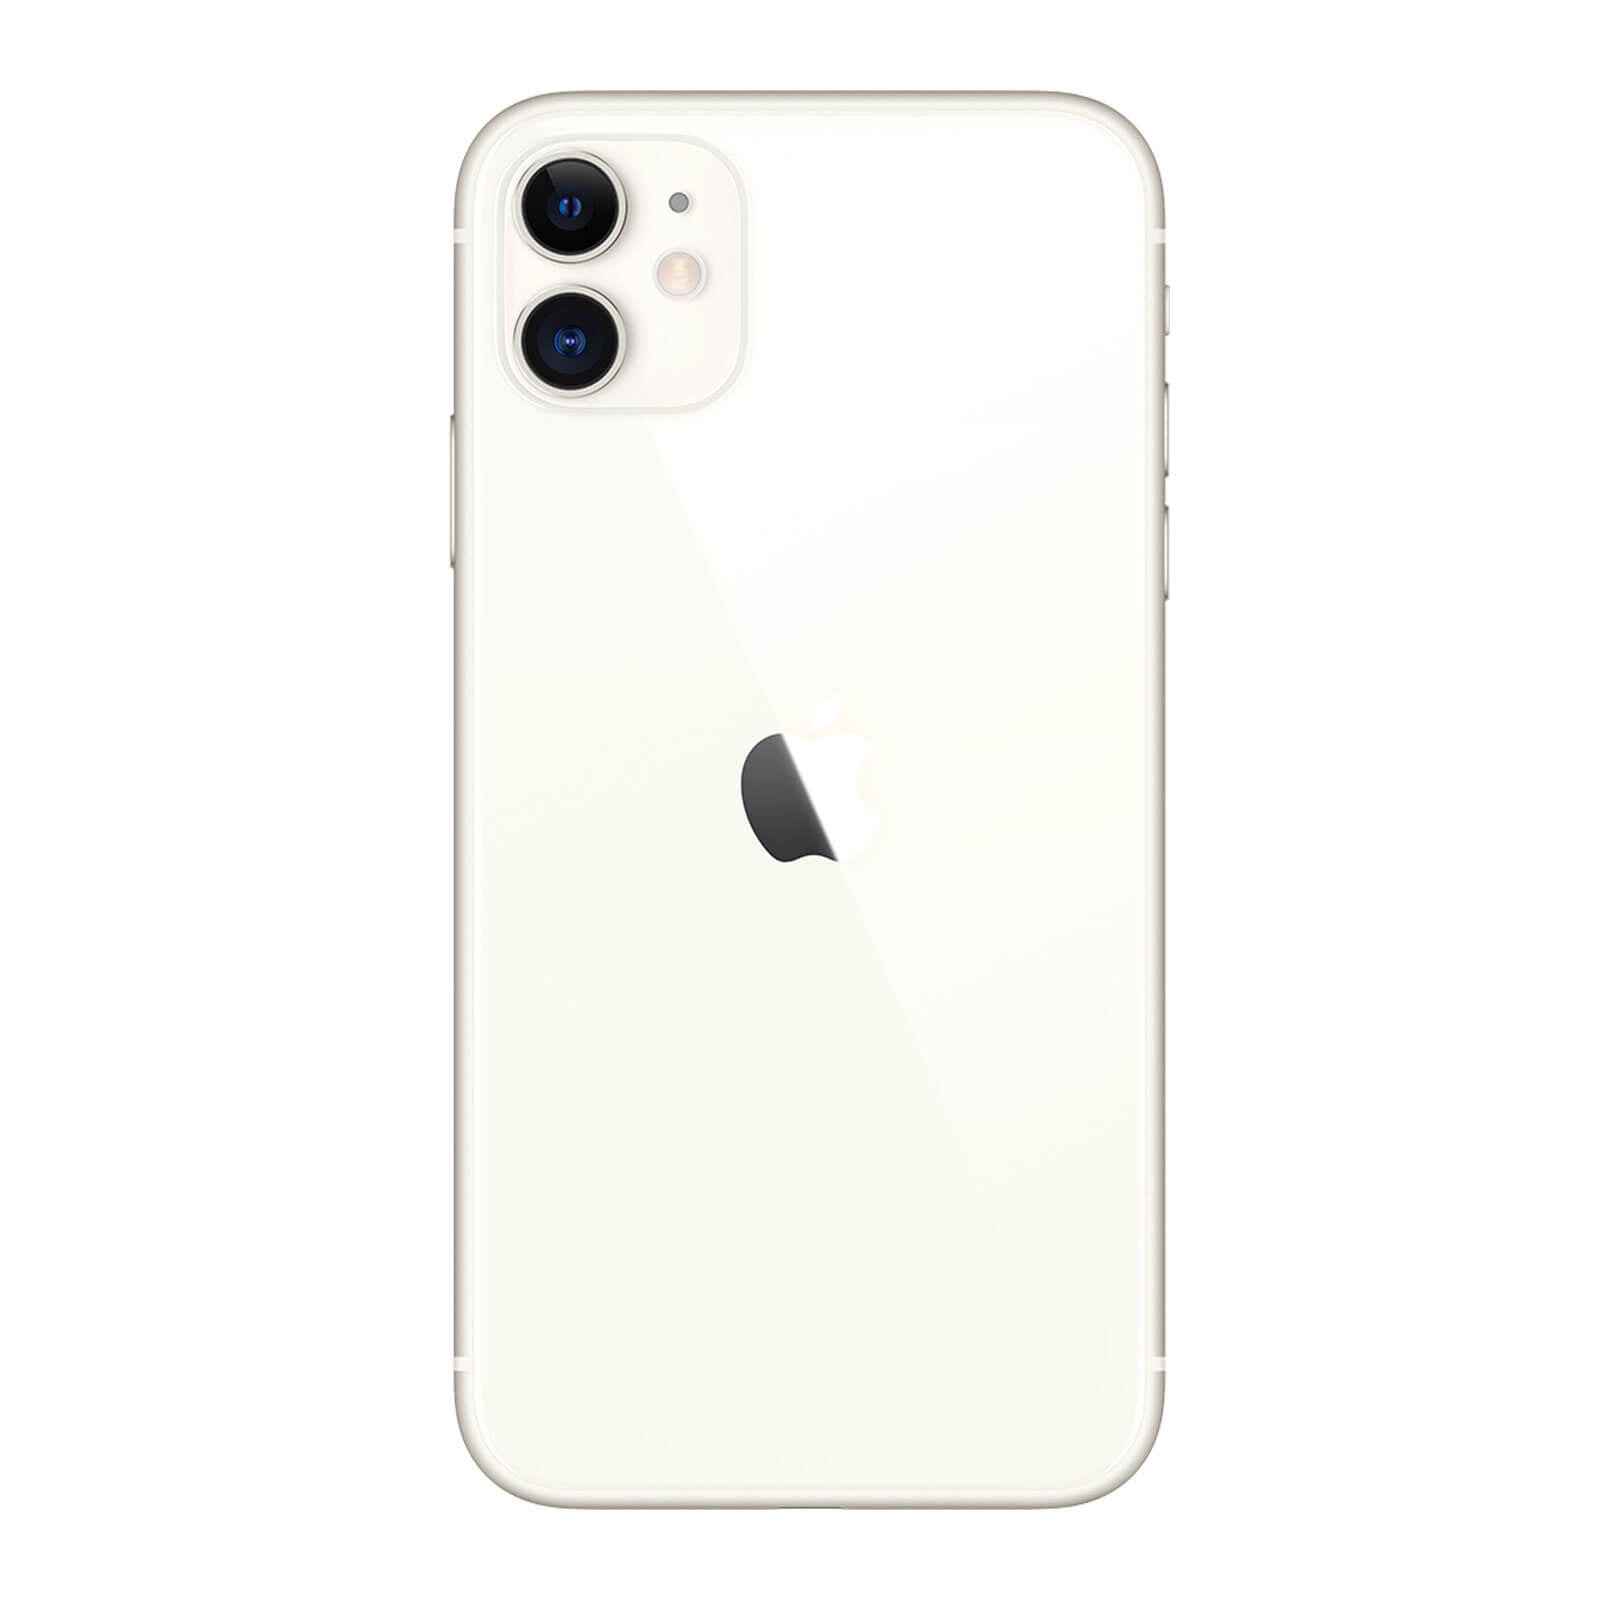 Apple iPhone 11 256GB White Very Good - Unlocked - Unlocked